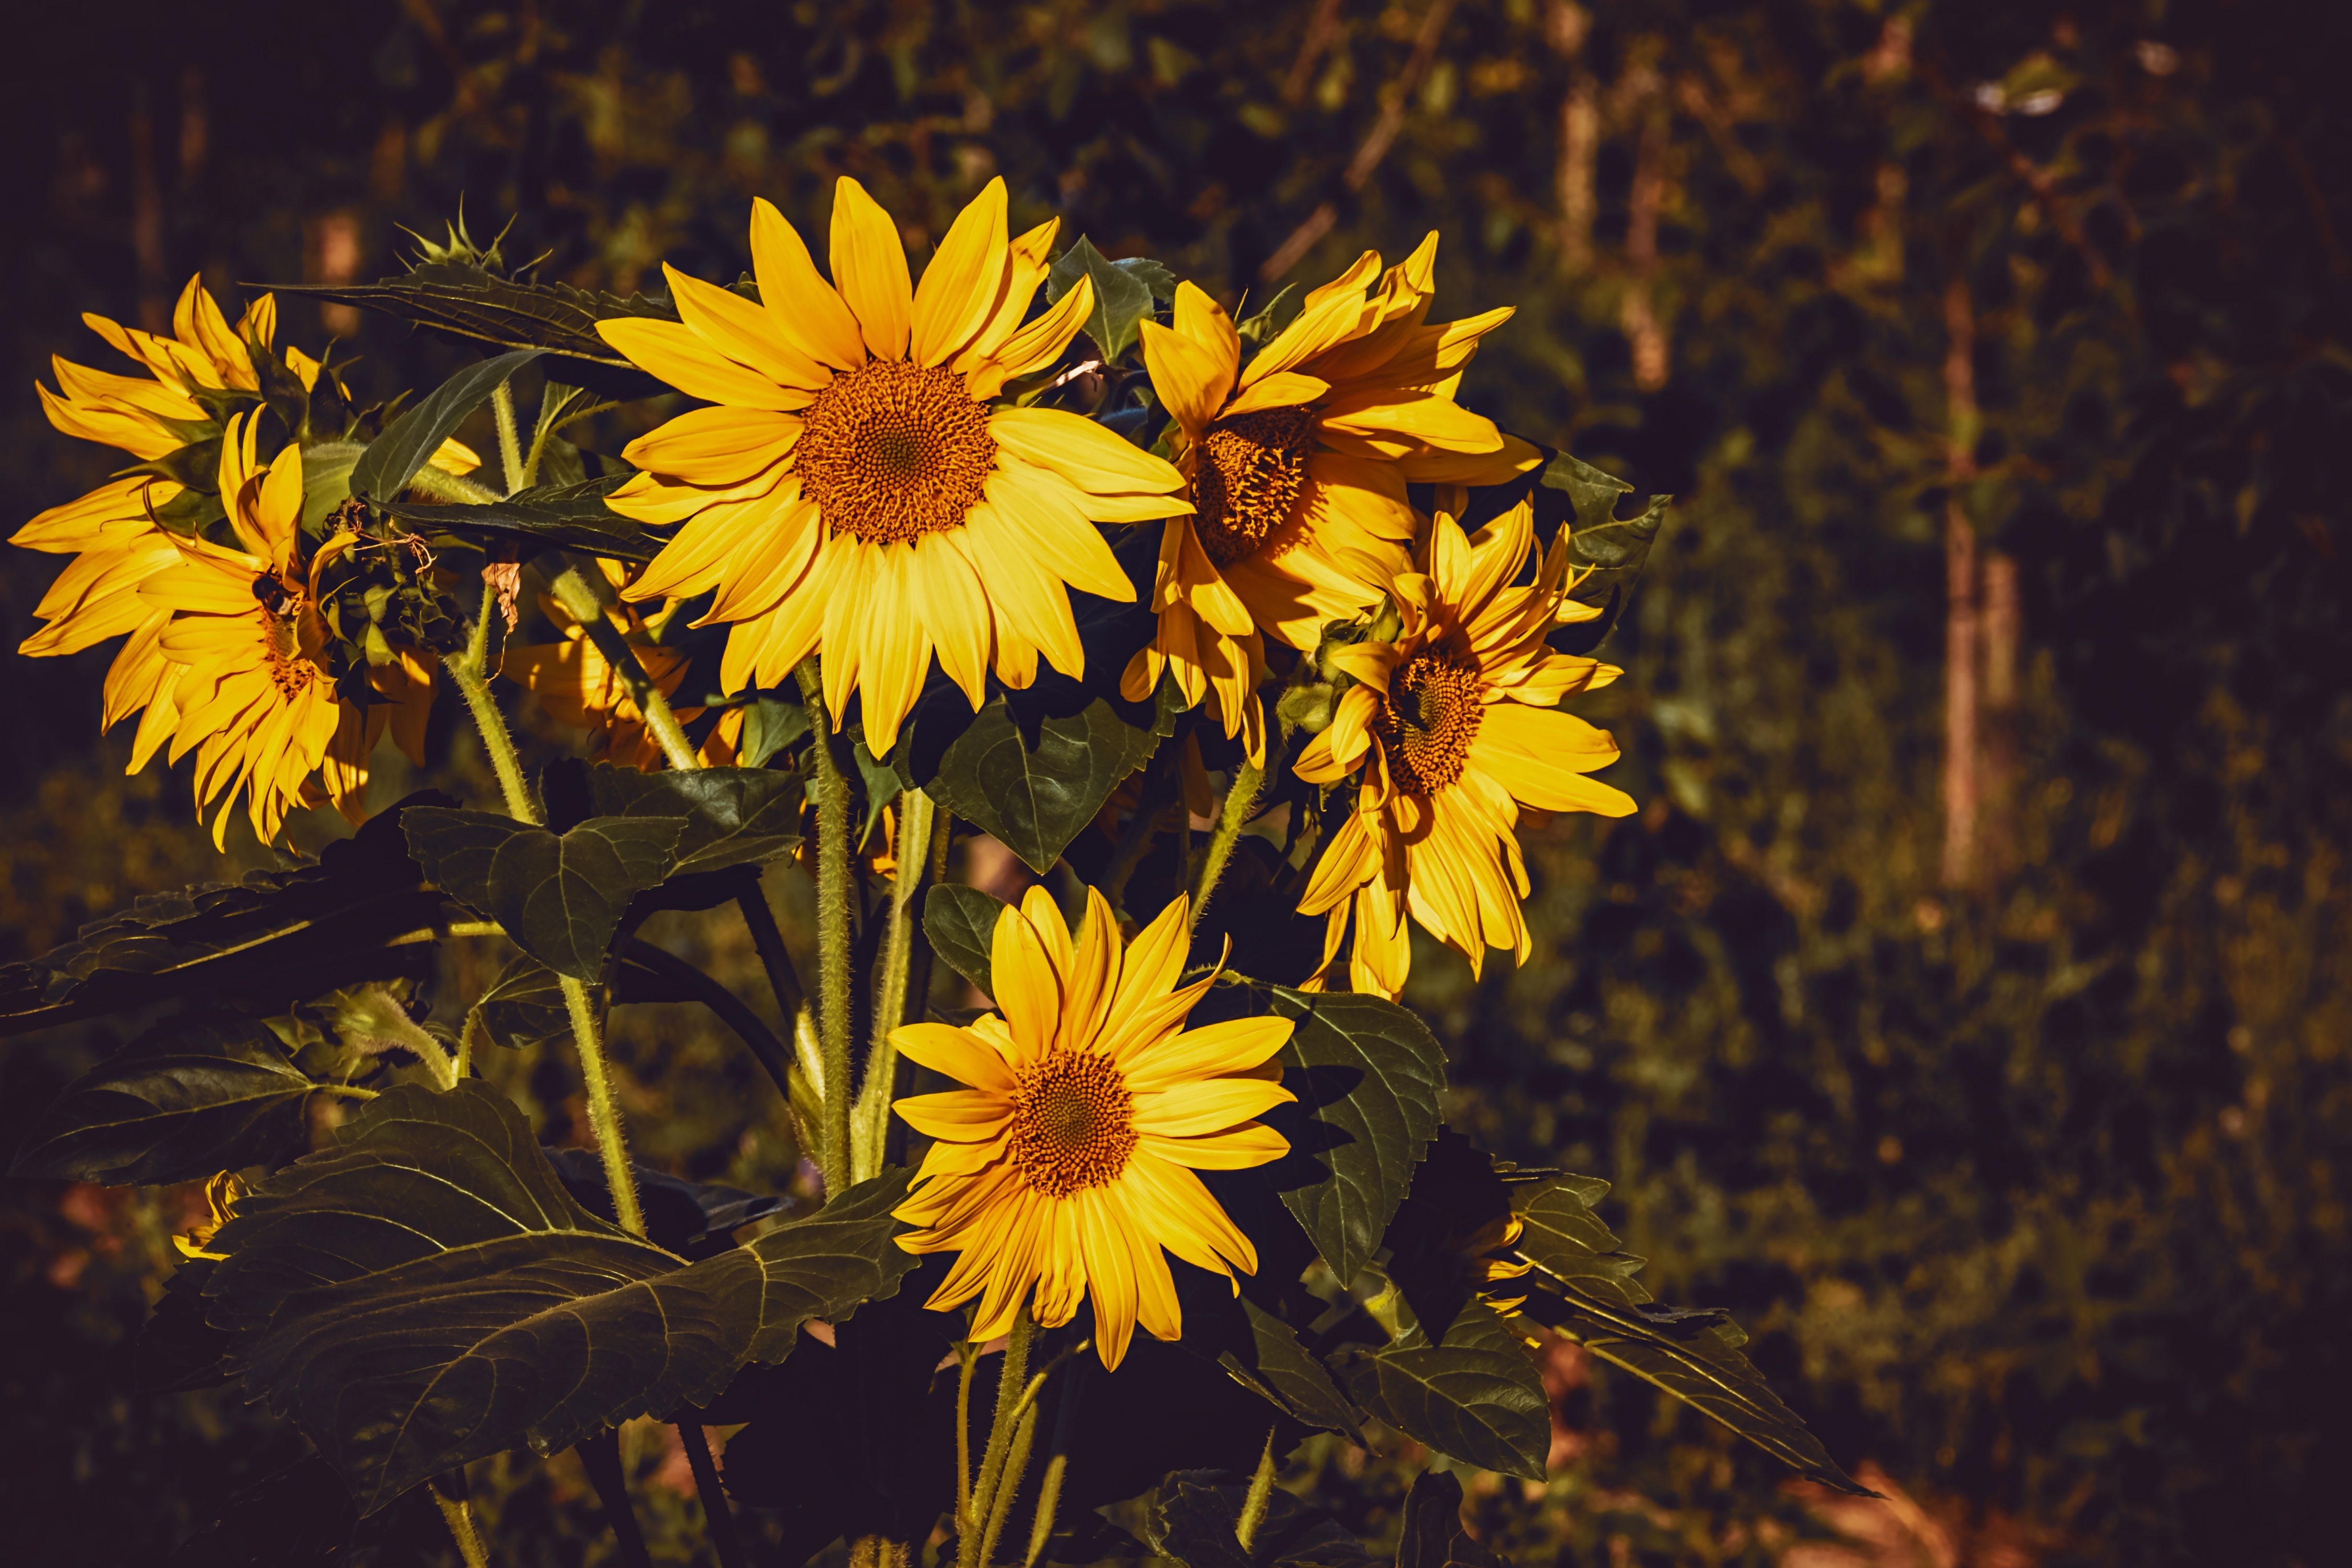 Download wallpaper 4896x3264 sunflower, flowers, summer, yellow HD background